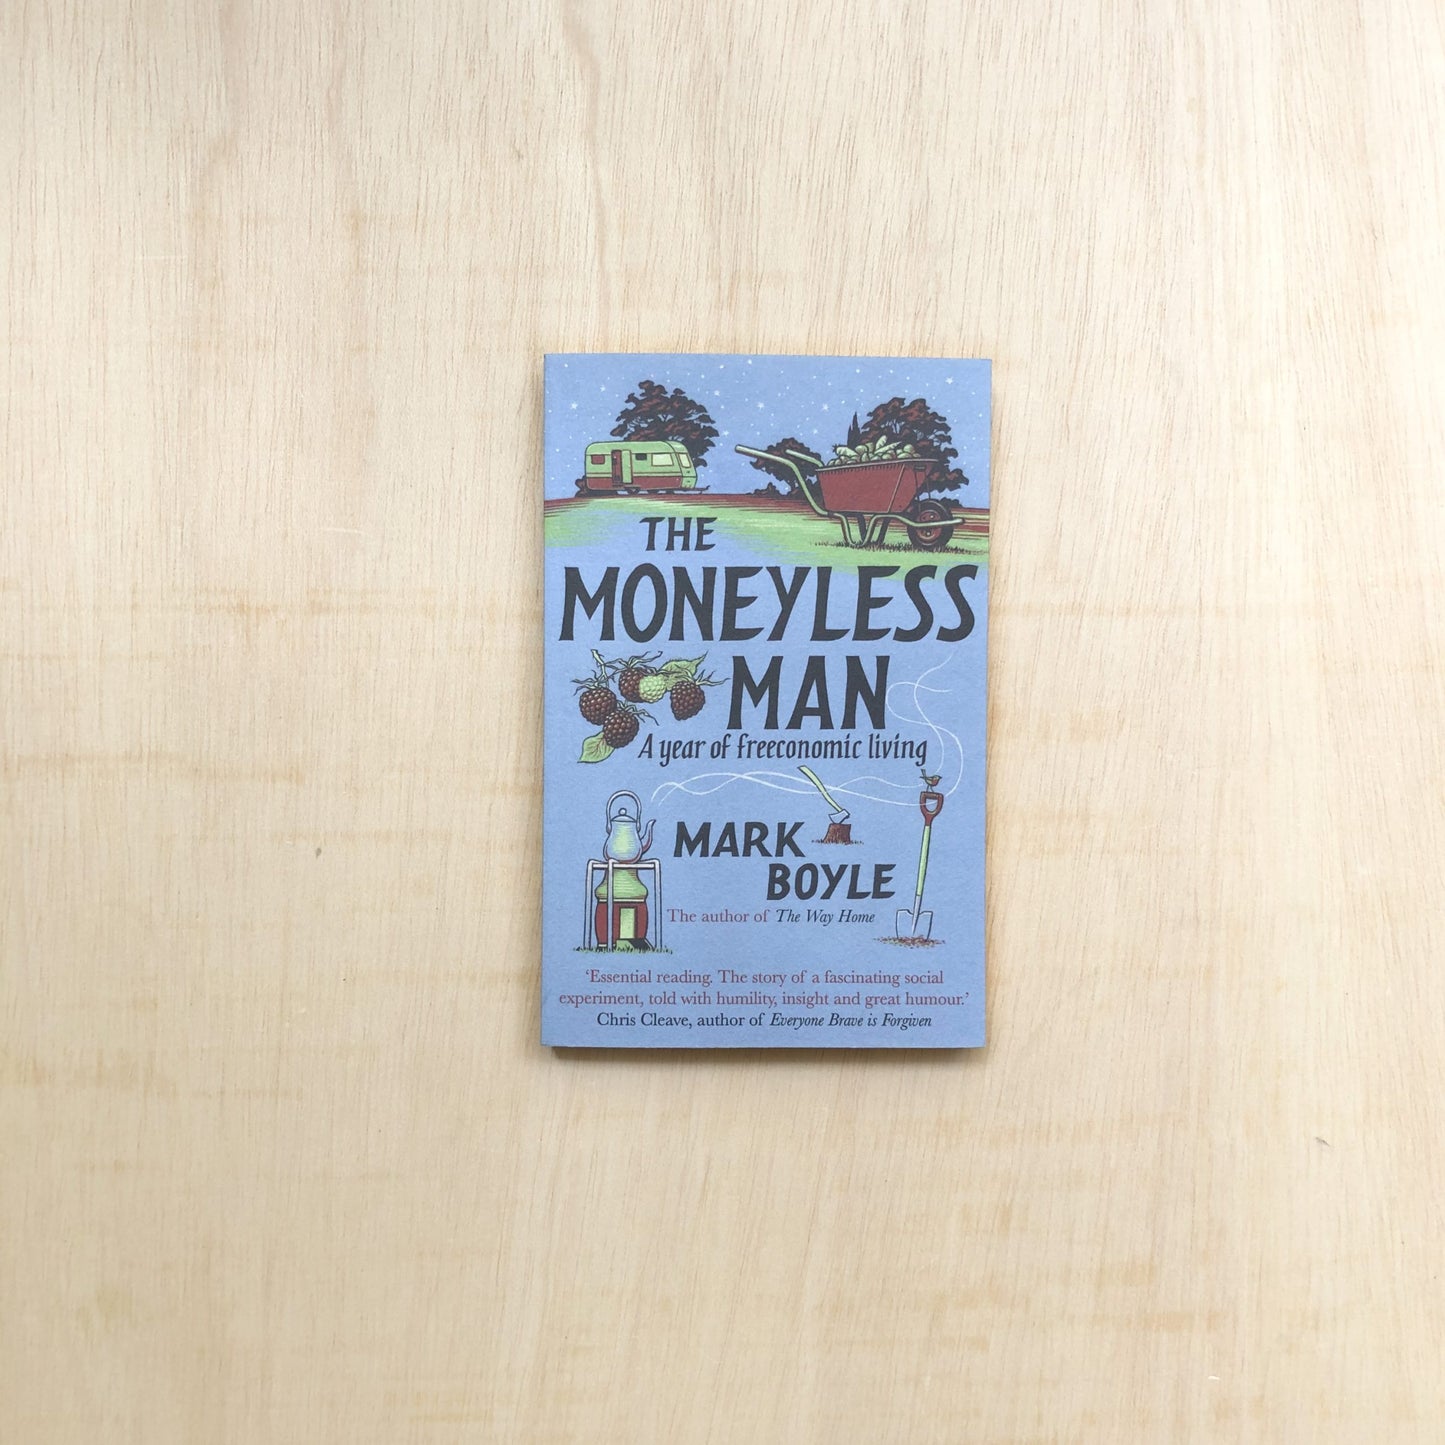 The Moneyless Man - A Year of Freeconomic Living